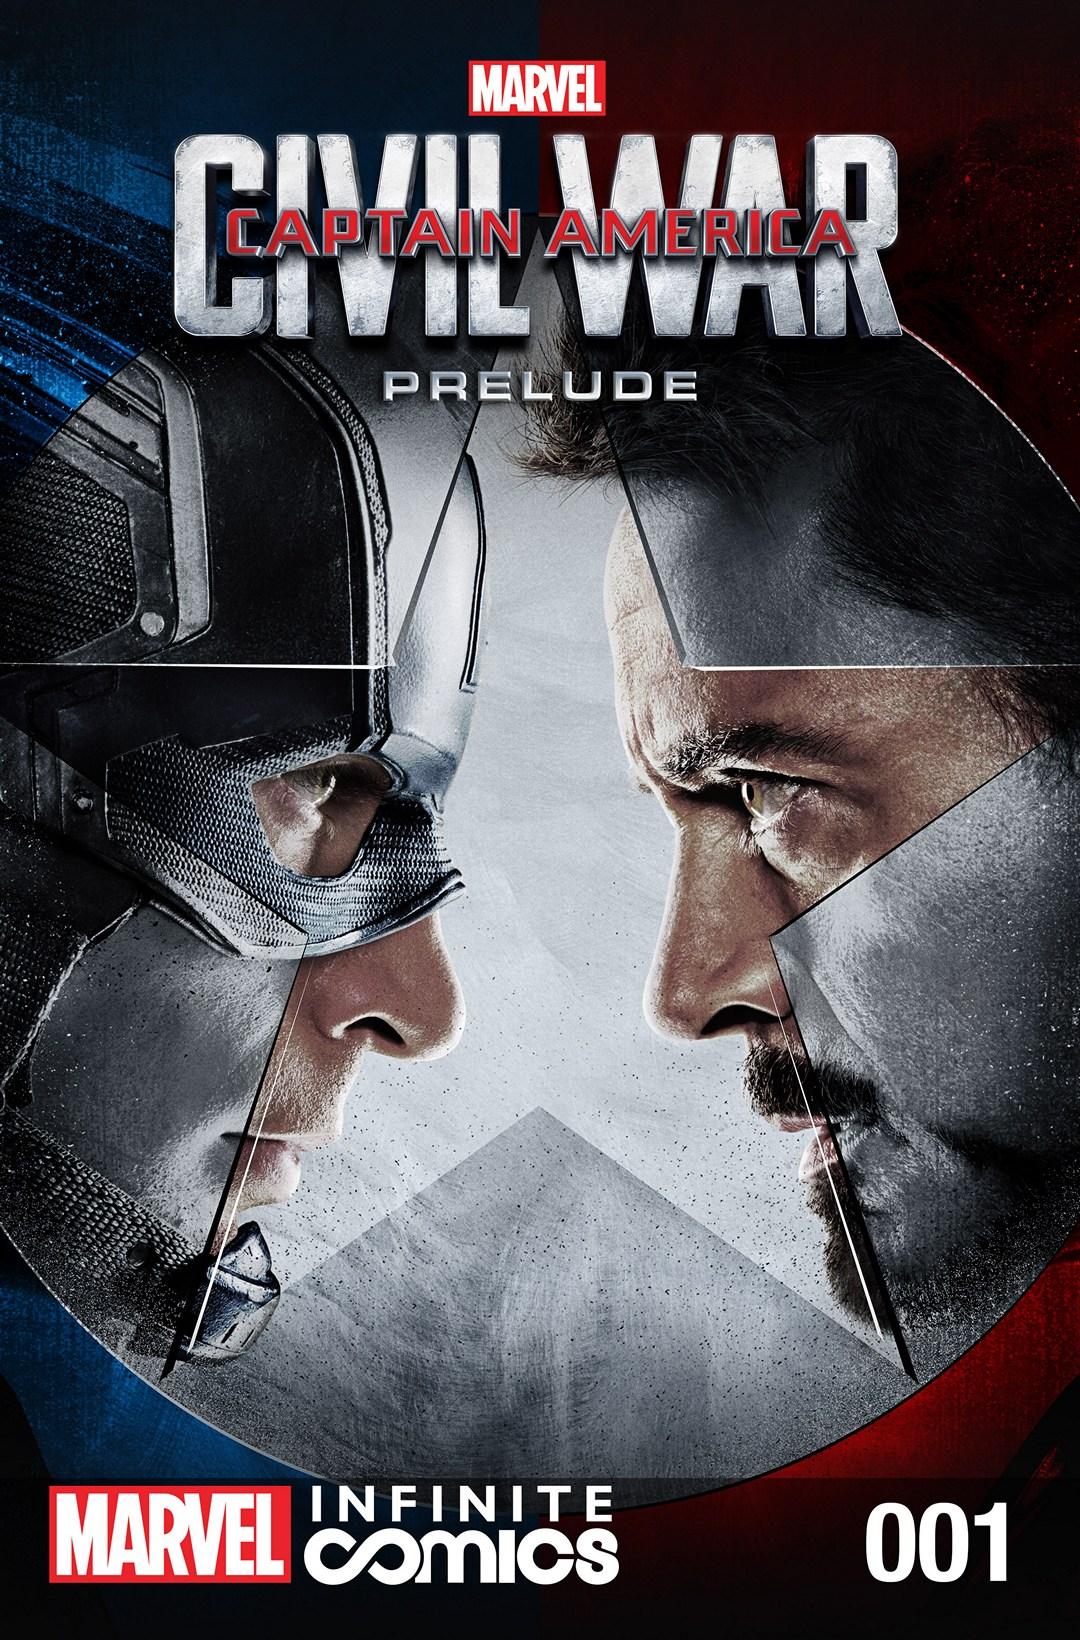 Marvel's Captain America: Civil War Prelude Infinite Comic Vol. 1 #1